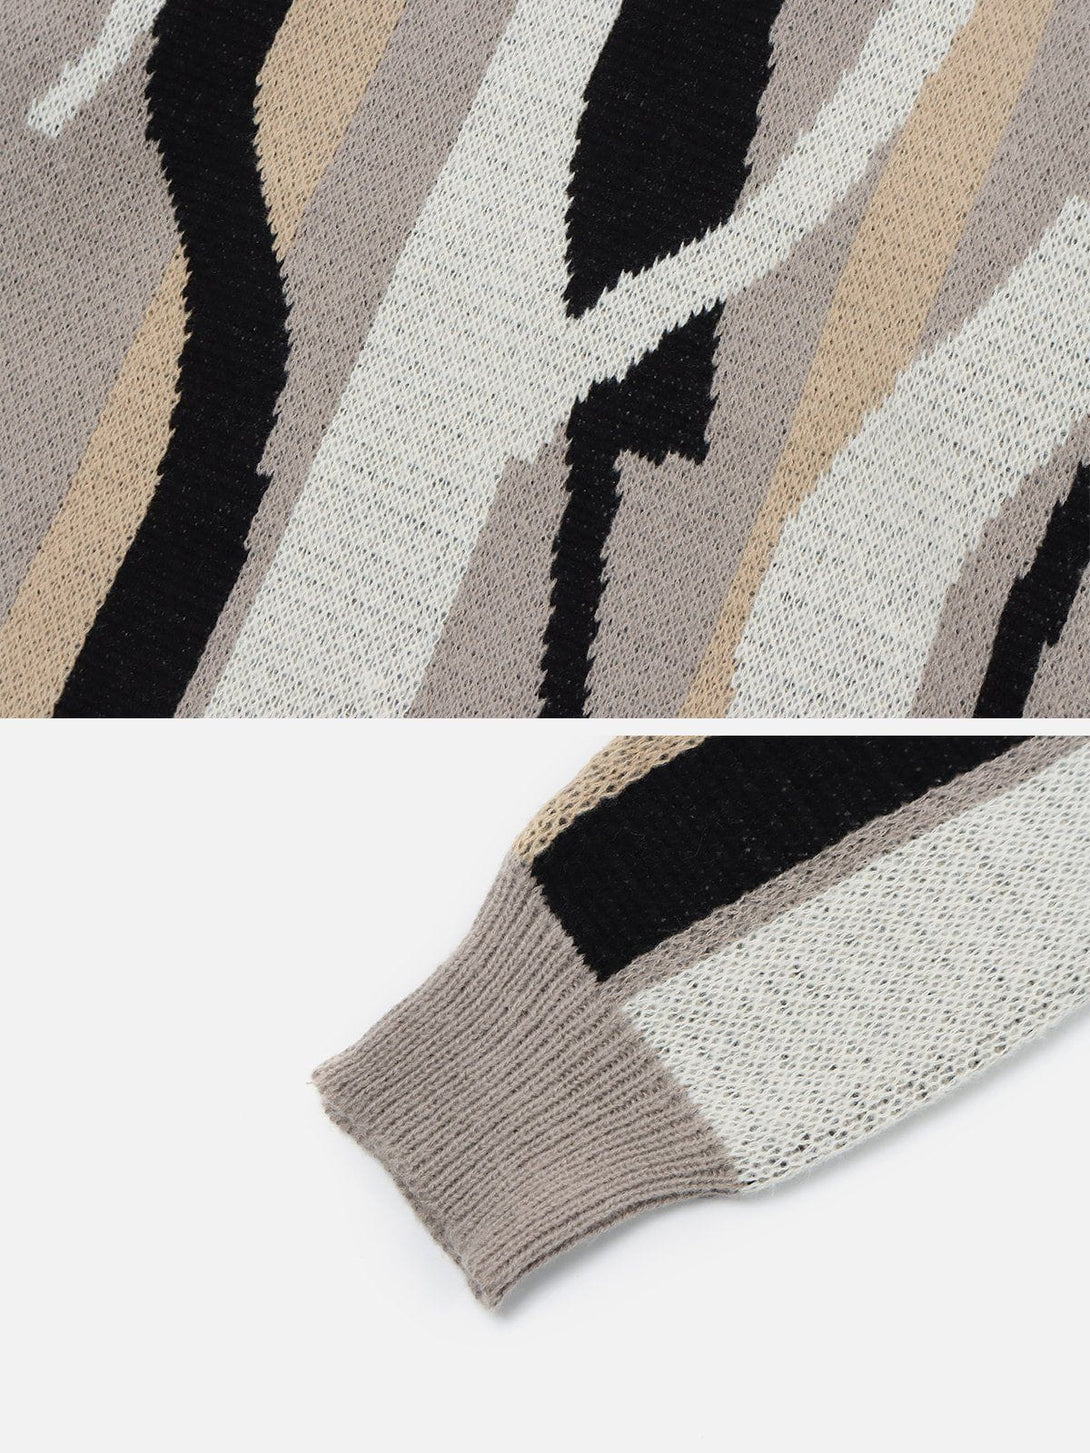 Majesda® - Geometric Stripes Sweater outfit ideas streetwear fashion